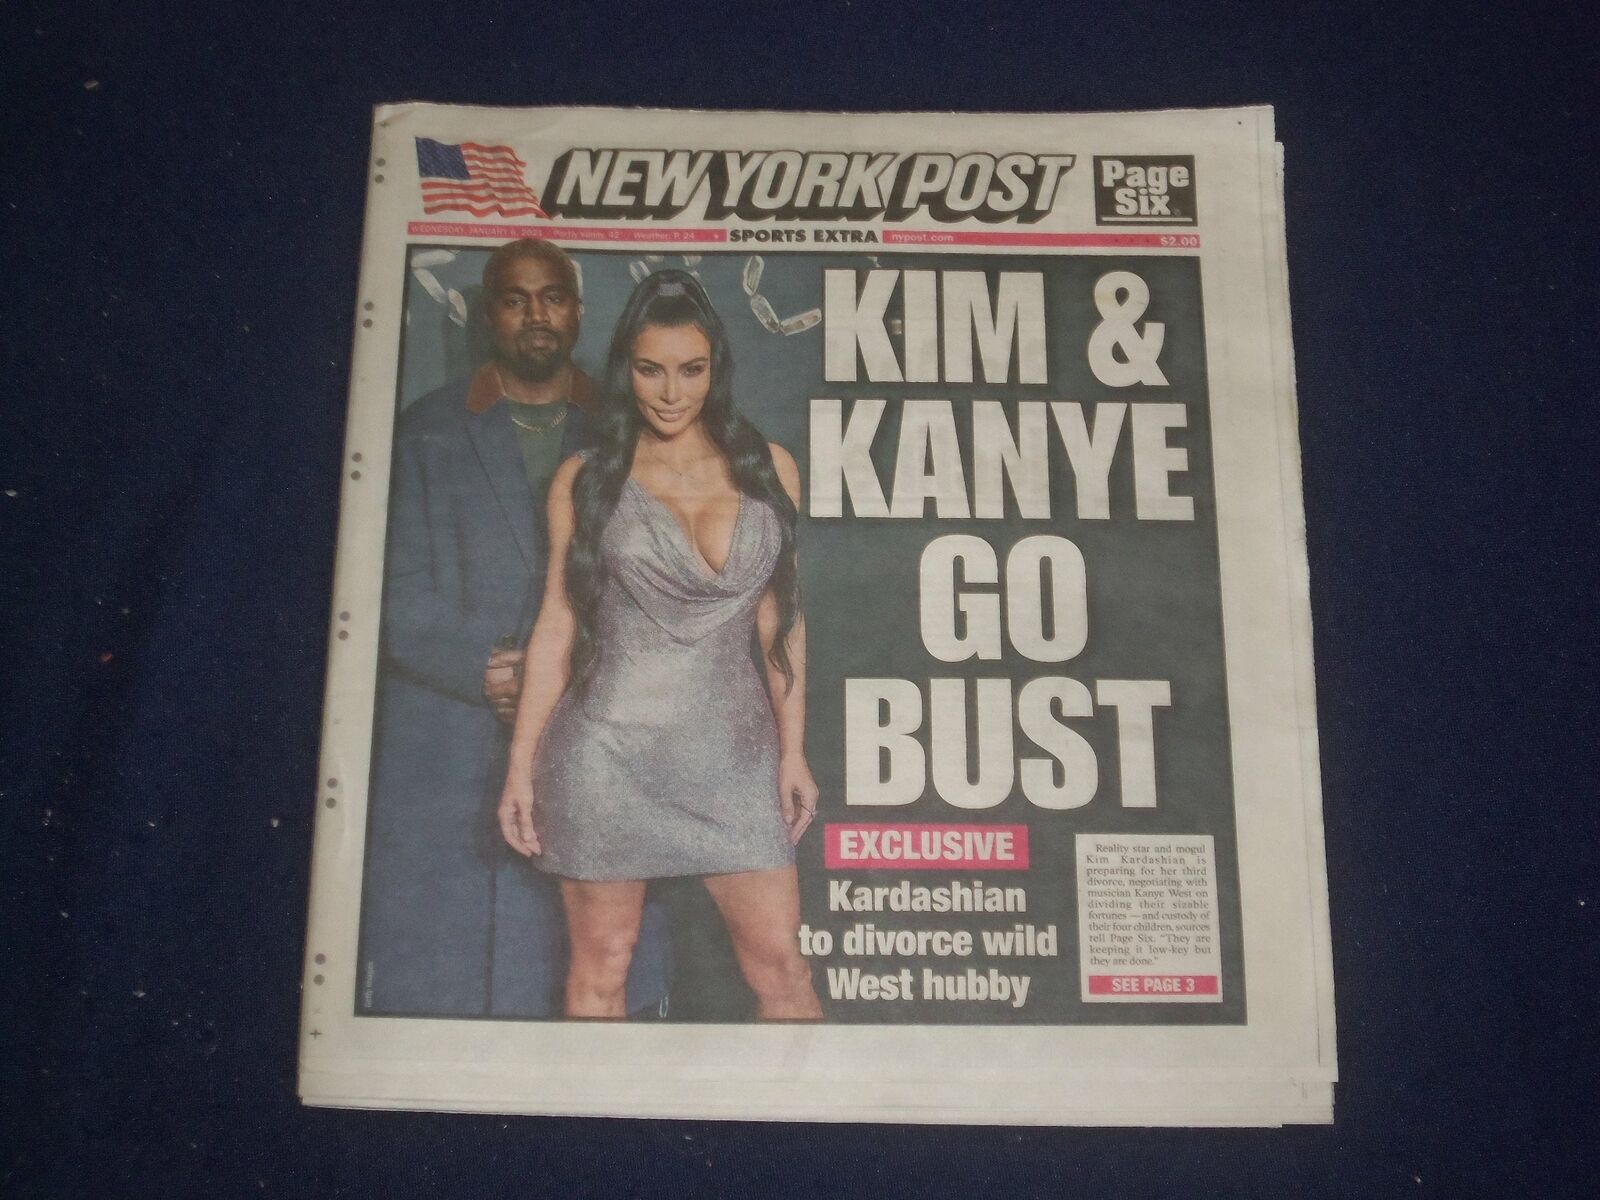 2021 JANUARY 6 NEW YORK POST NEWSPAPER - KIM & KANYE GO BUST - WILL DIVORCE